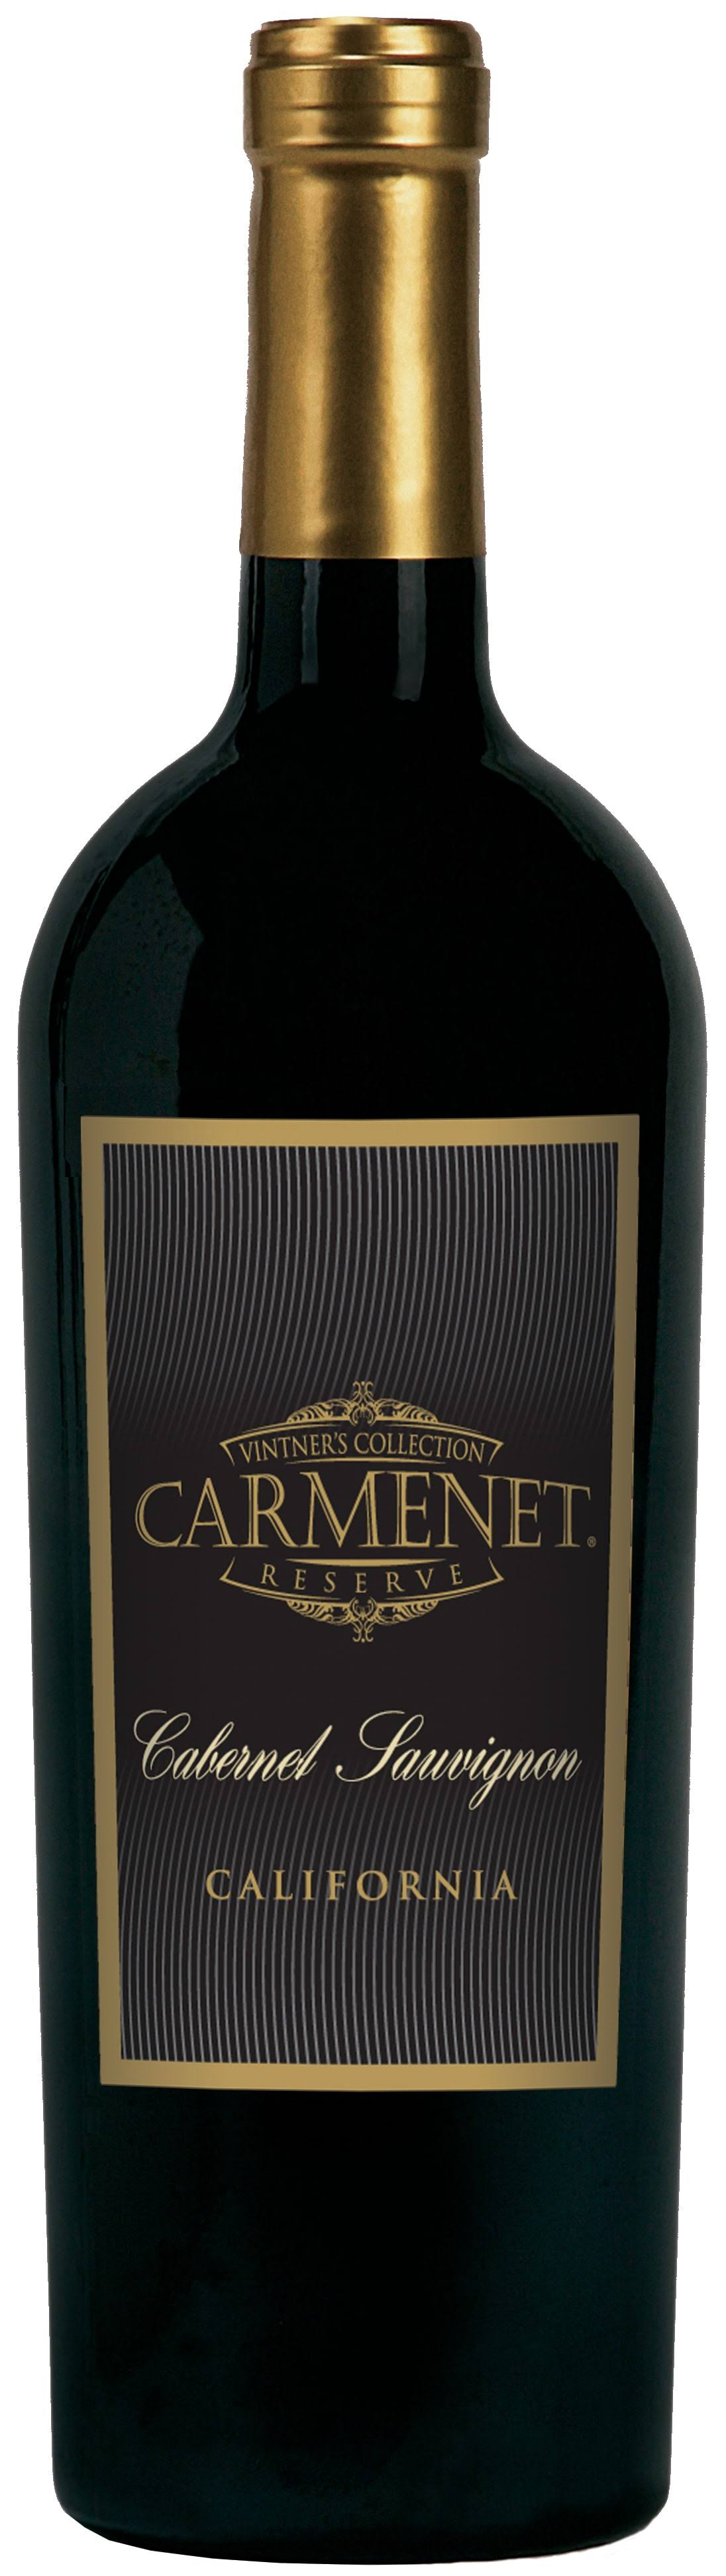 Carmenet Cabernet Sauvignon, California, 2013 - 750 ml